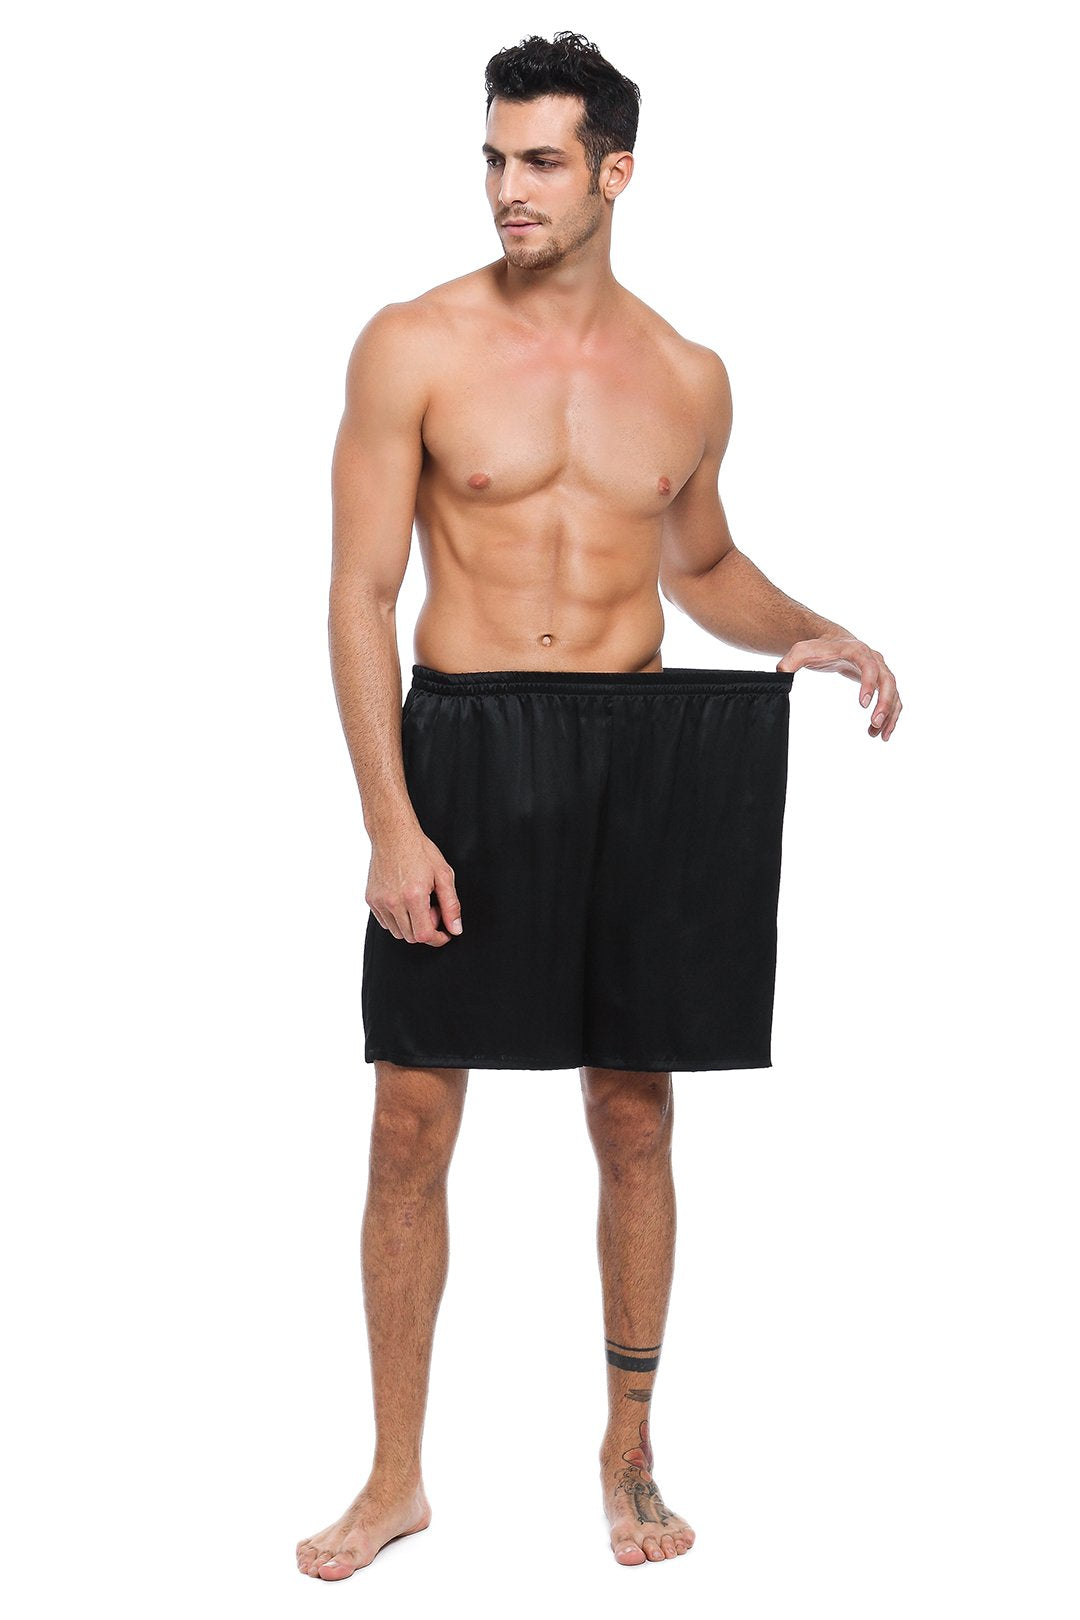 LEPTON 100% Mulberry Silk Men Boxers Shorts Super Comfortble